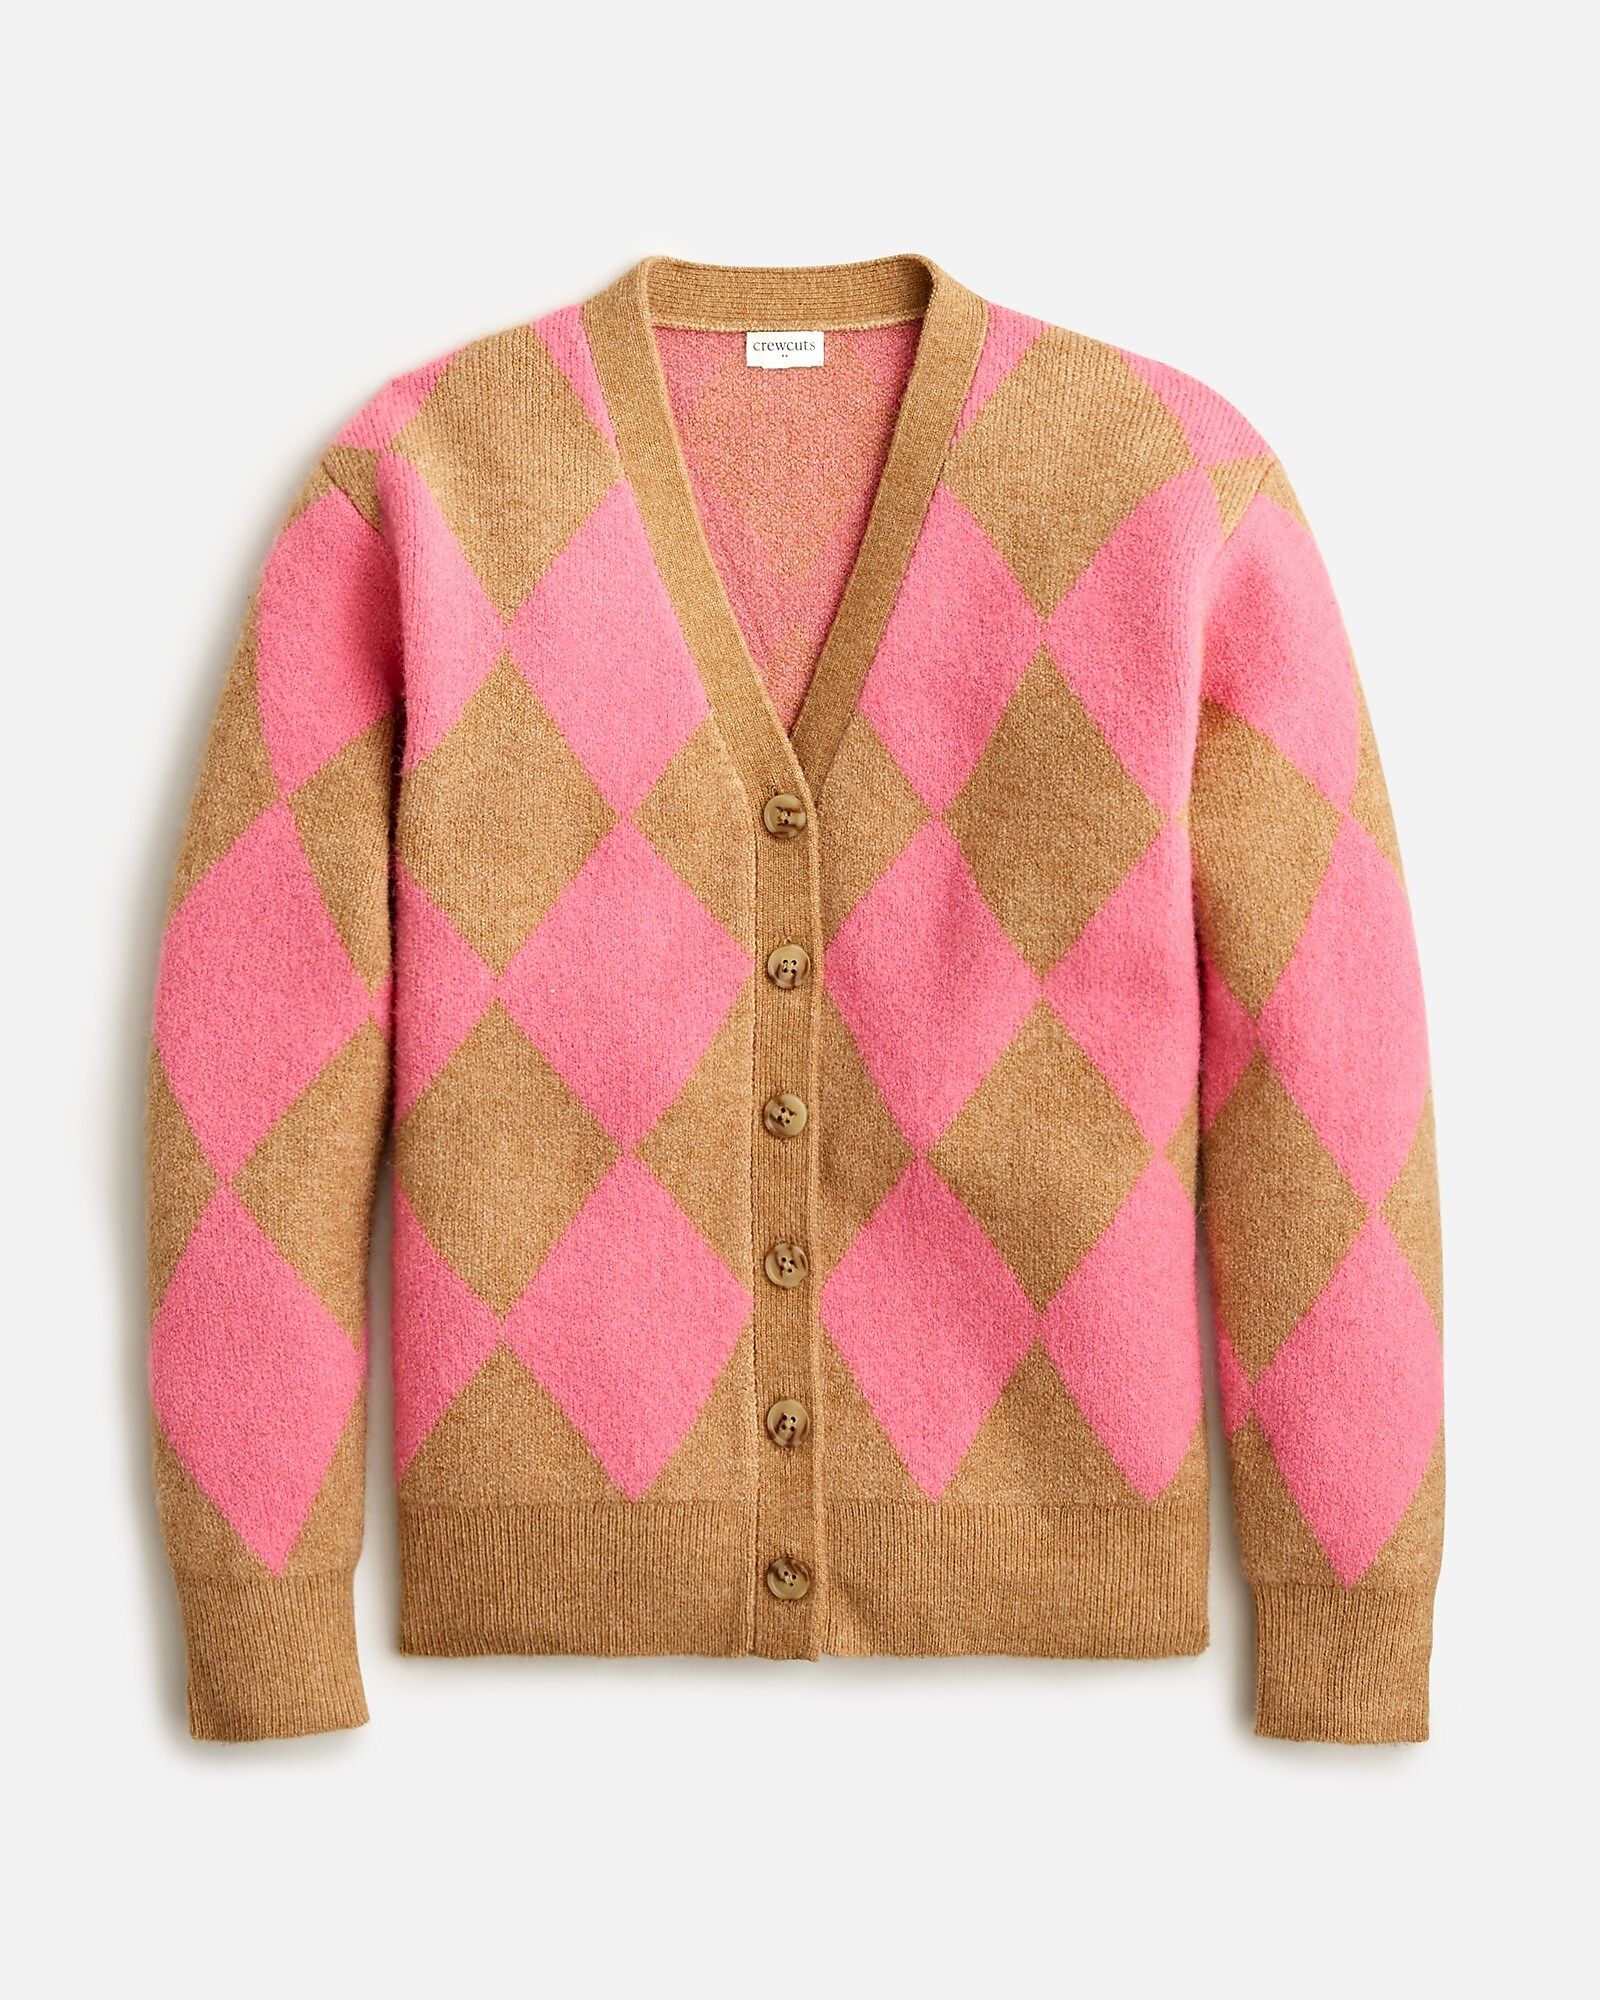 Girls' wool-blend argyle cardigan sweater | J.Crew US